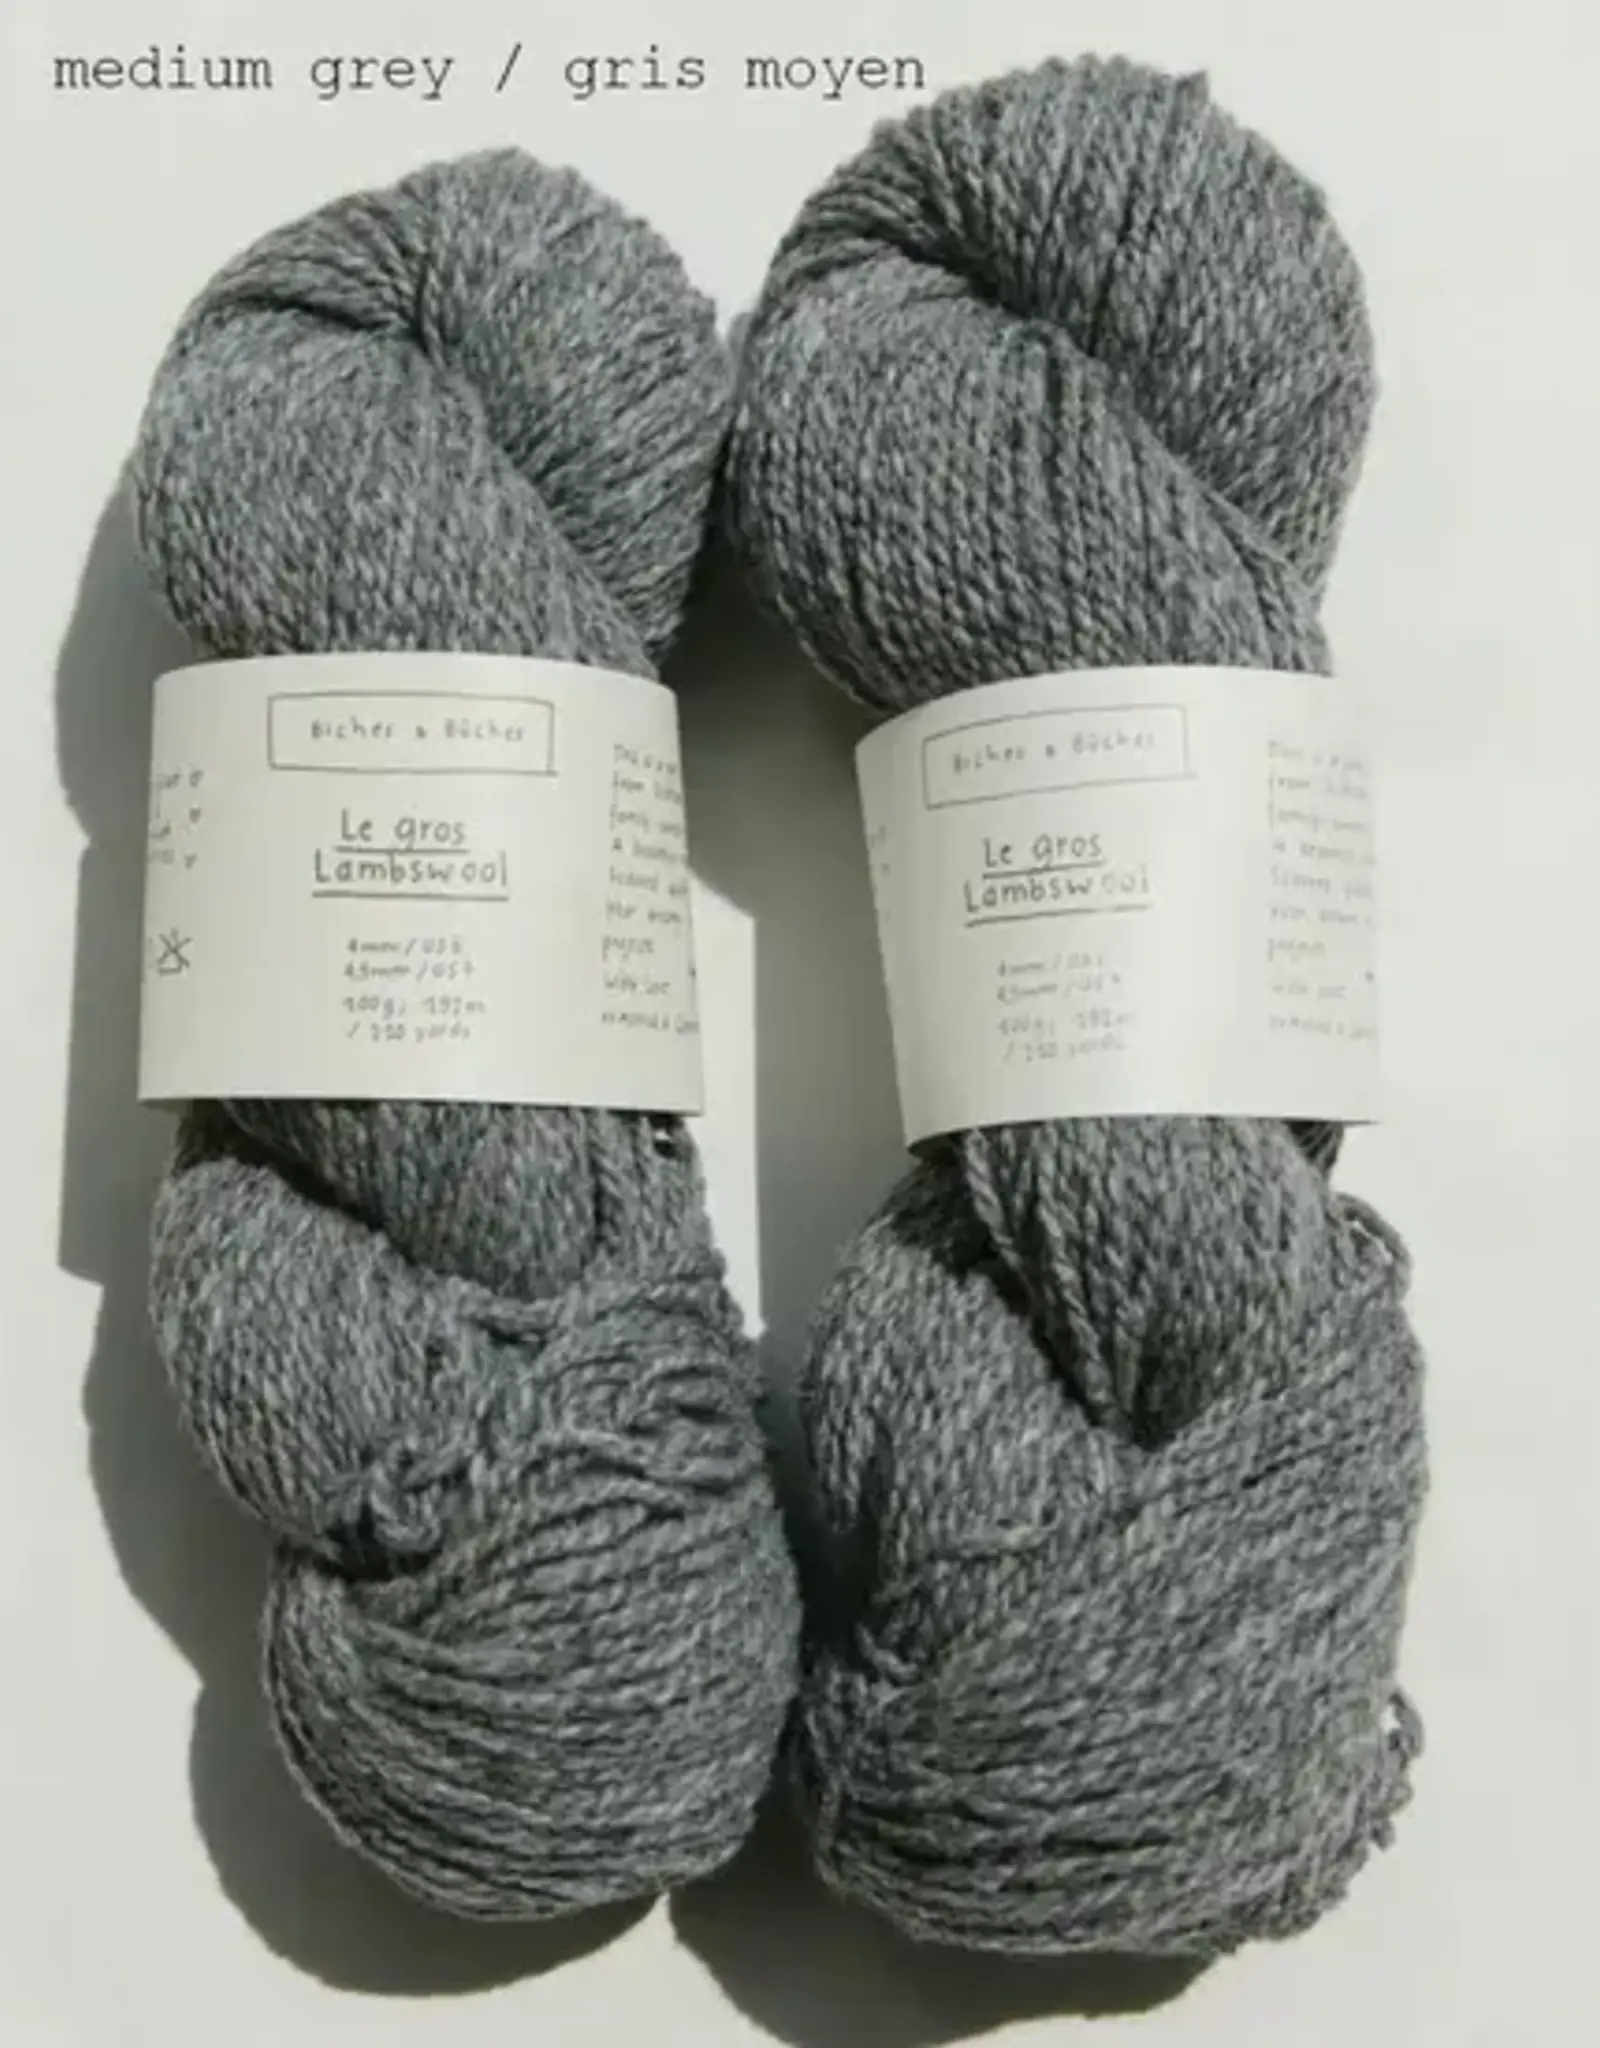 Biches & Buches Le Gros Lambswool medium grey